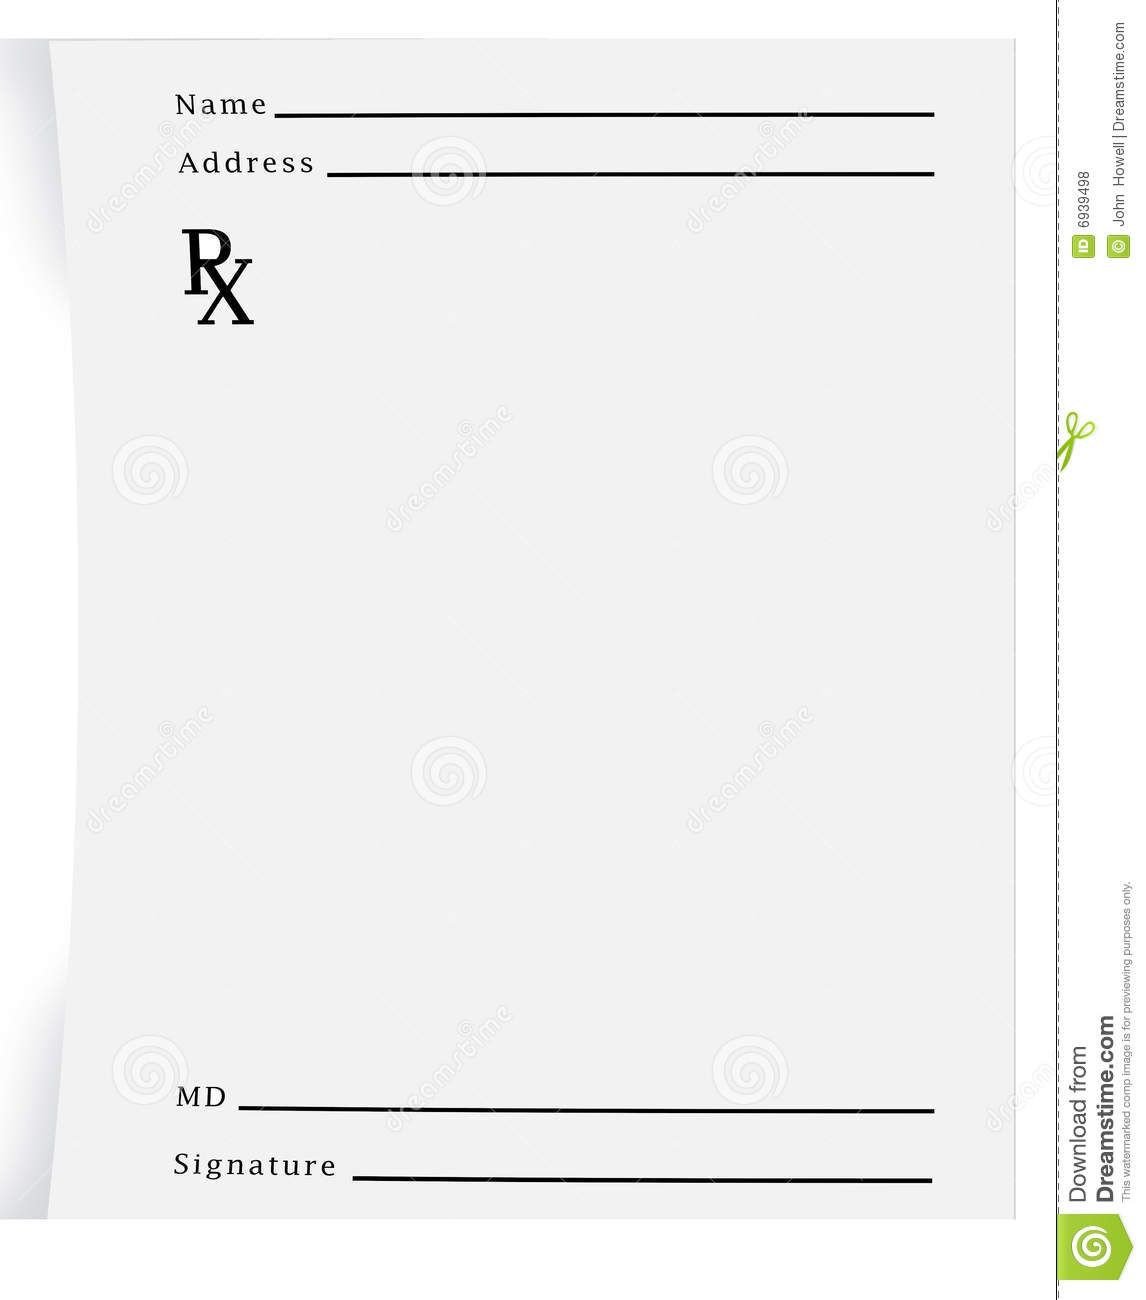 Picture Of Prescription Pad Prescription Pad Blank Download From Over 27 Million